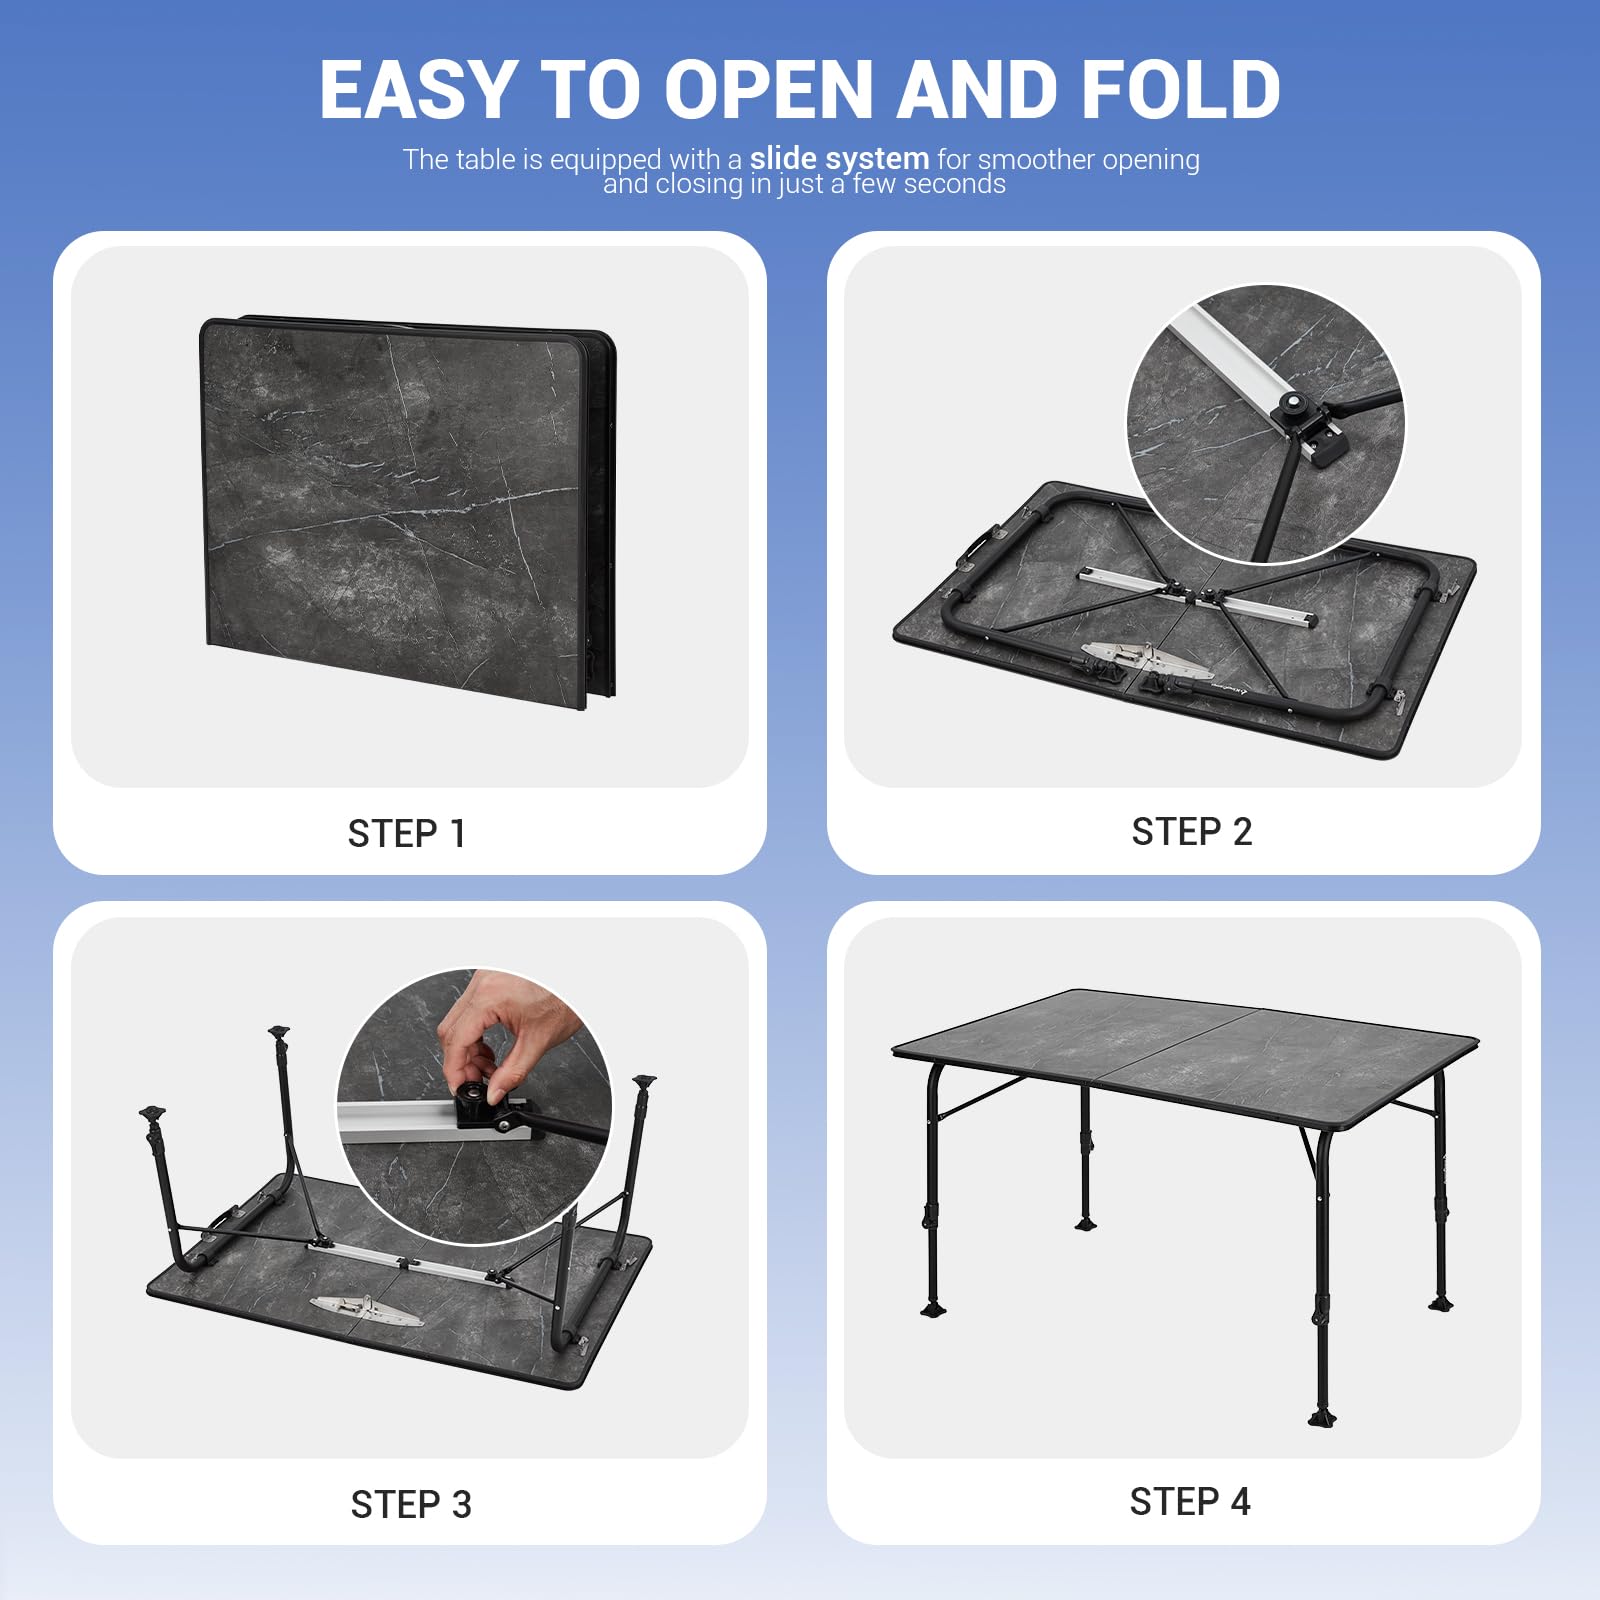 folding table